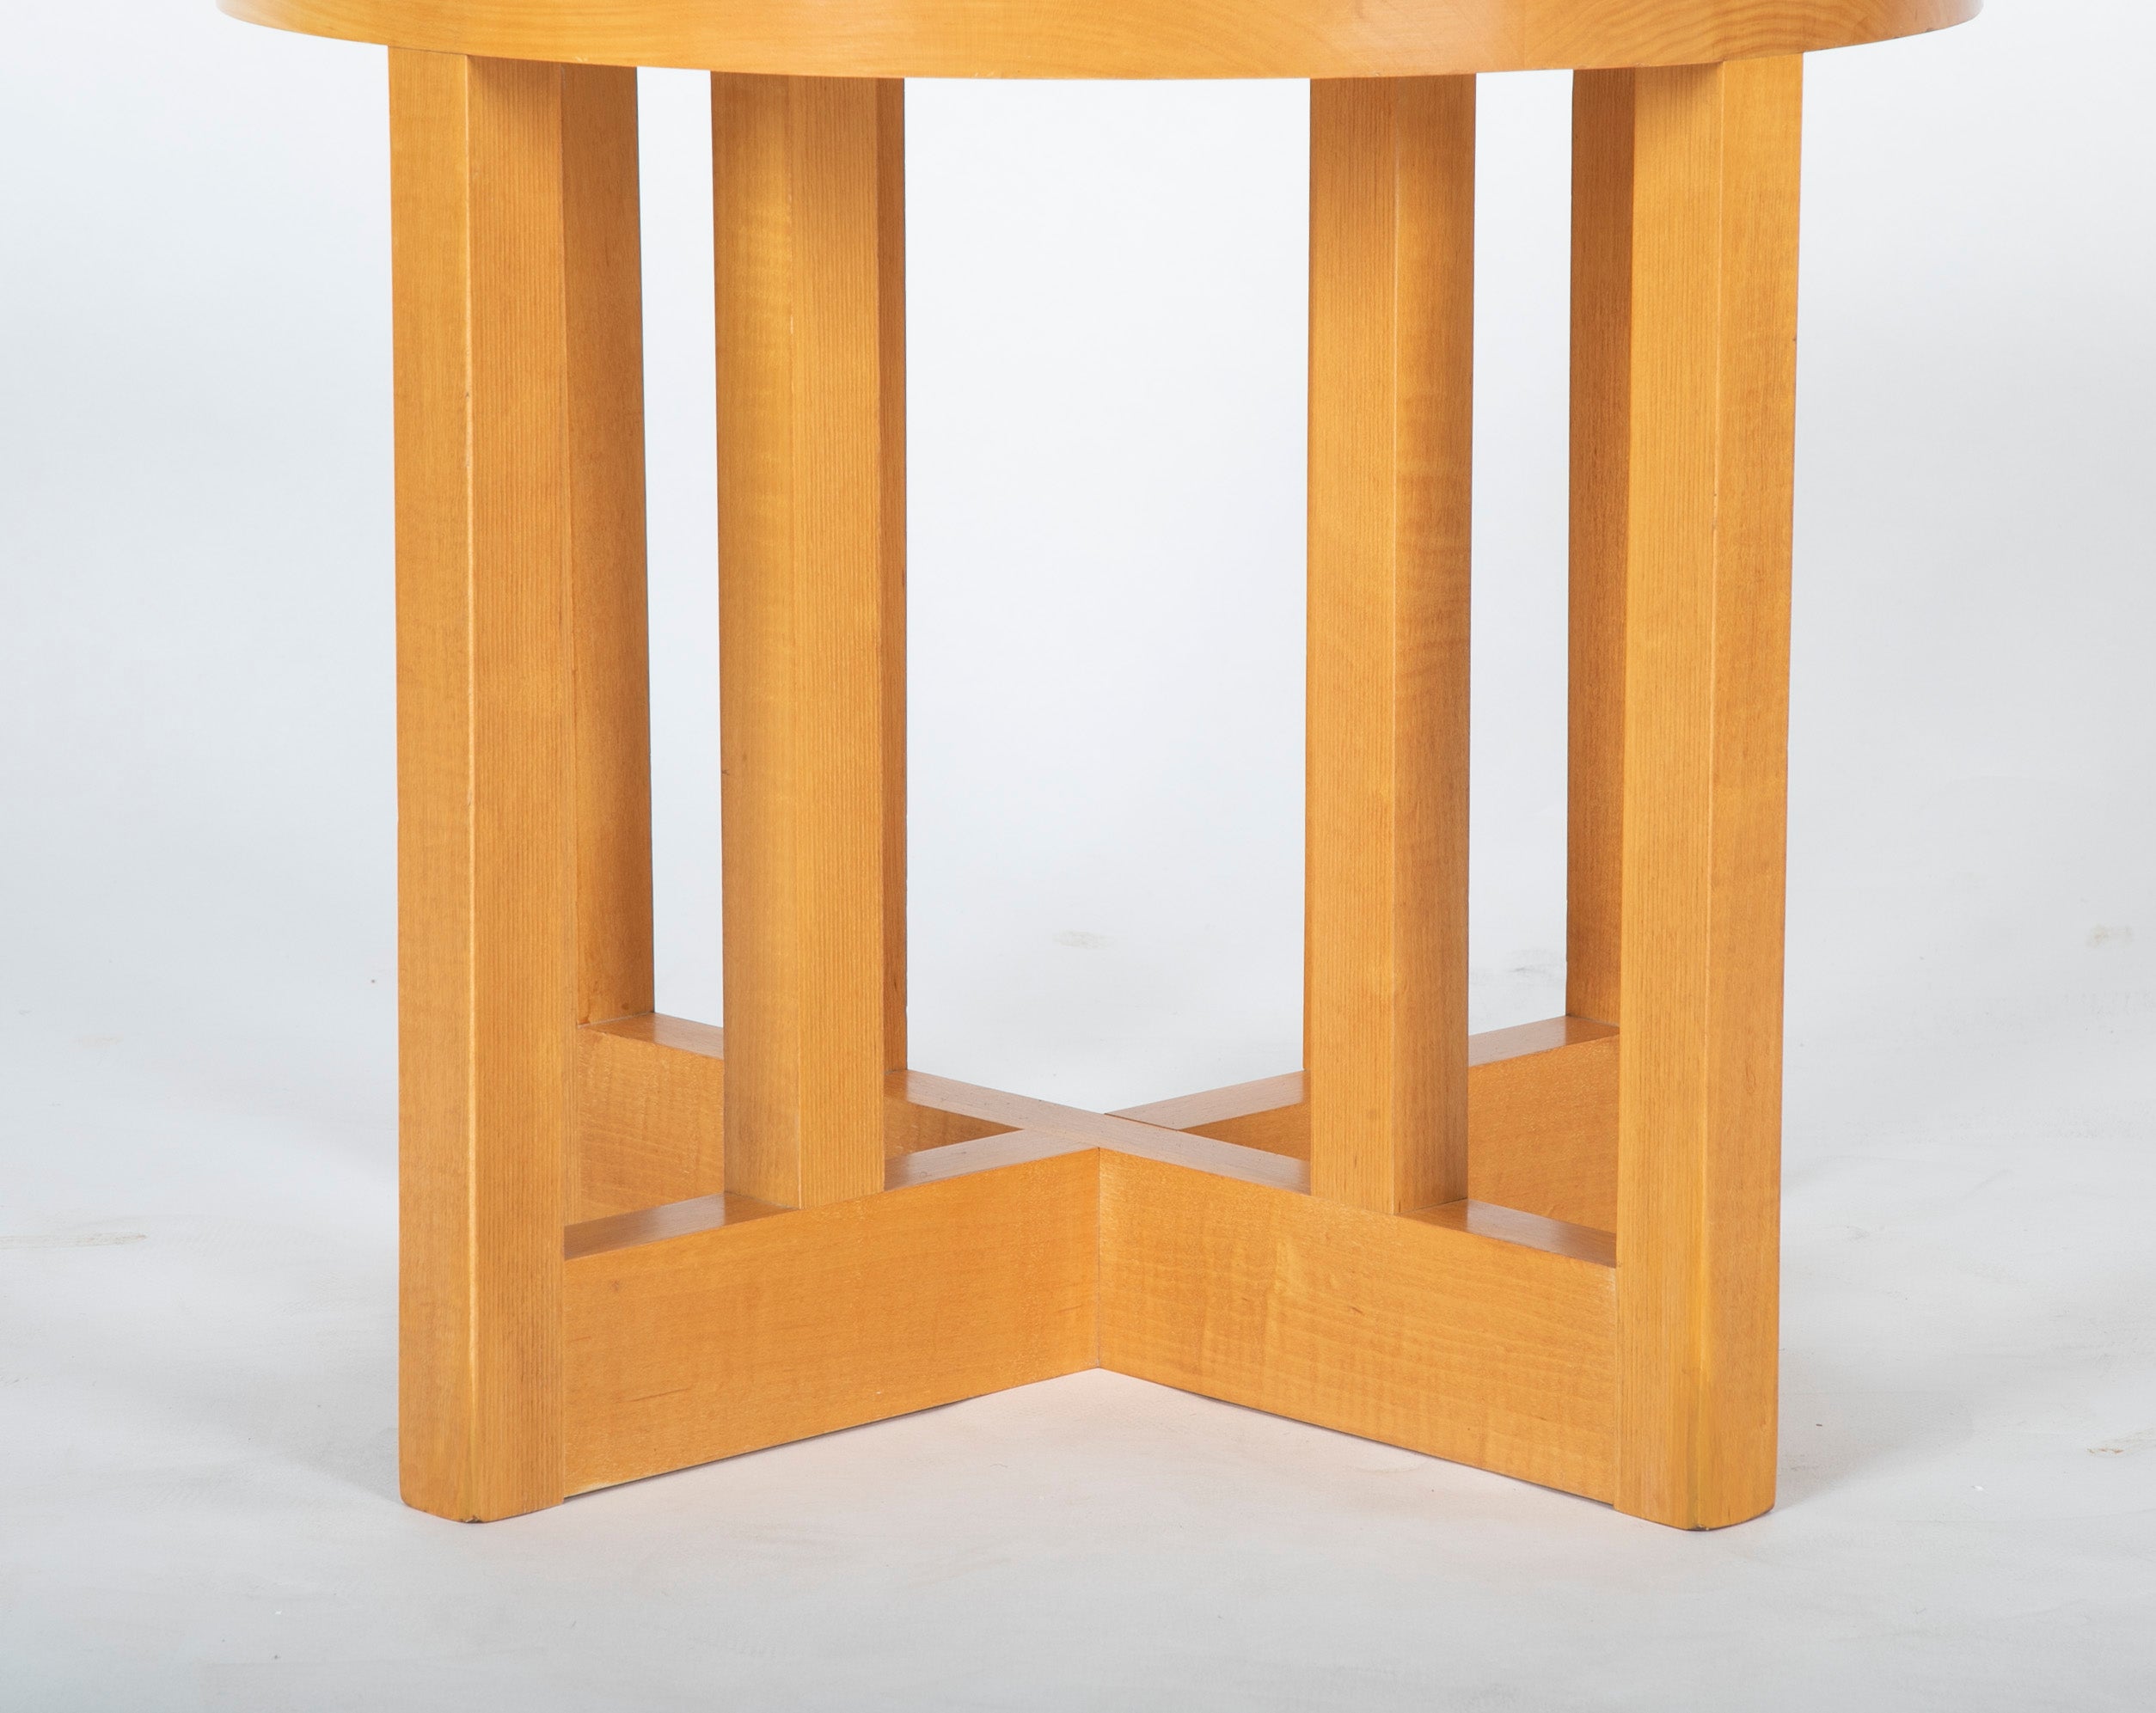 Model 820 Low Side Table or Stool Designed by Richard Meier for Knoll